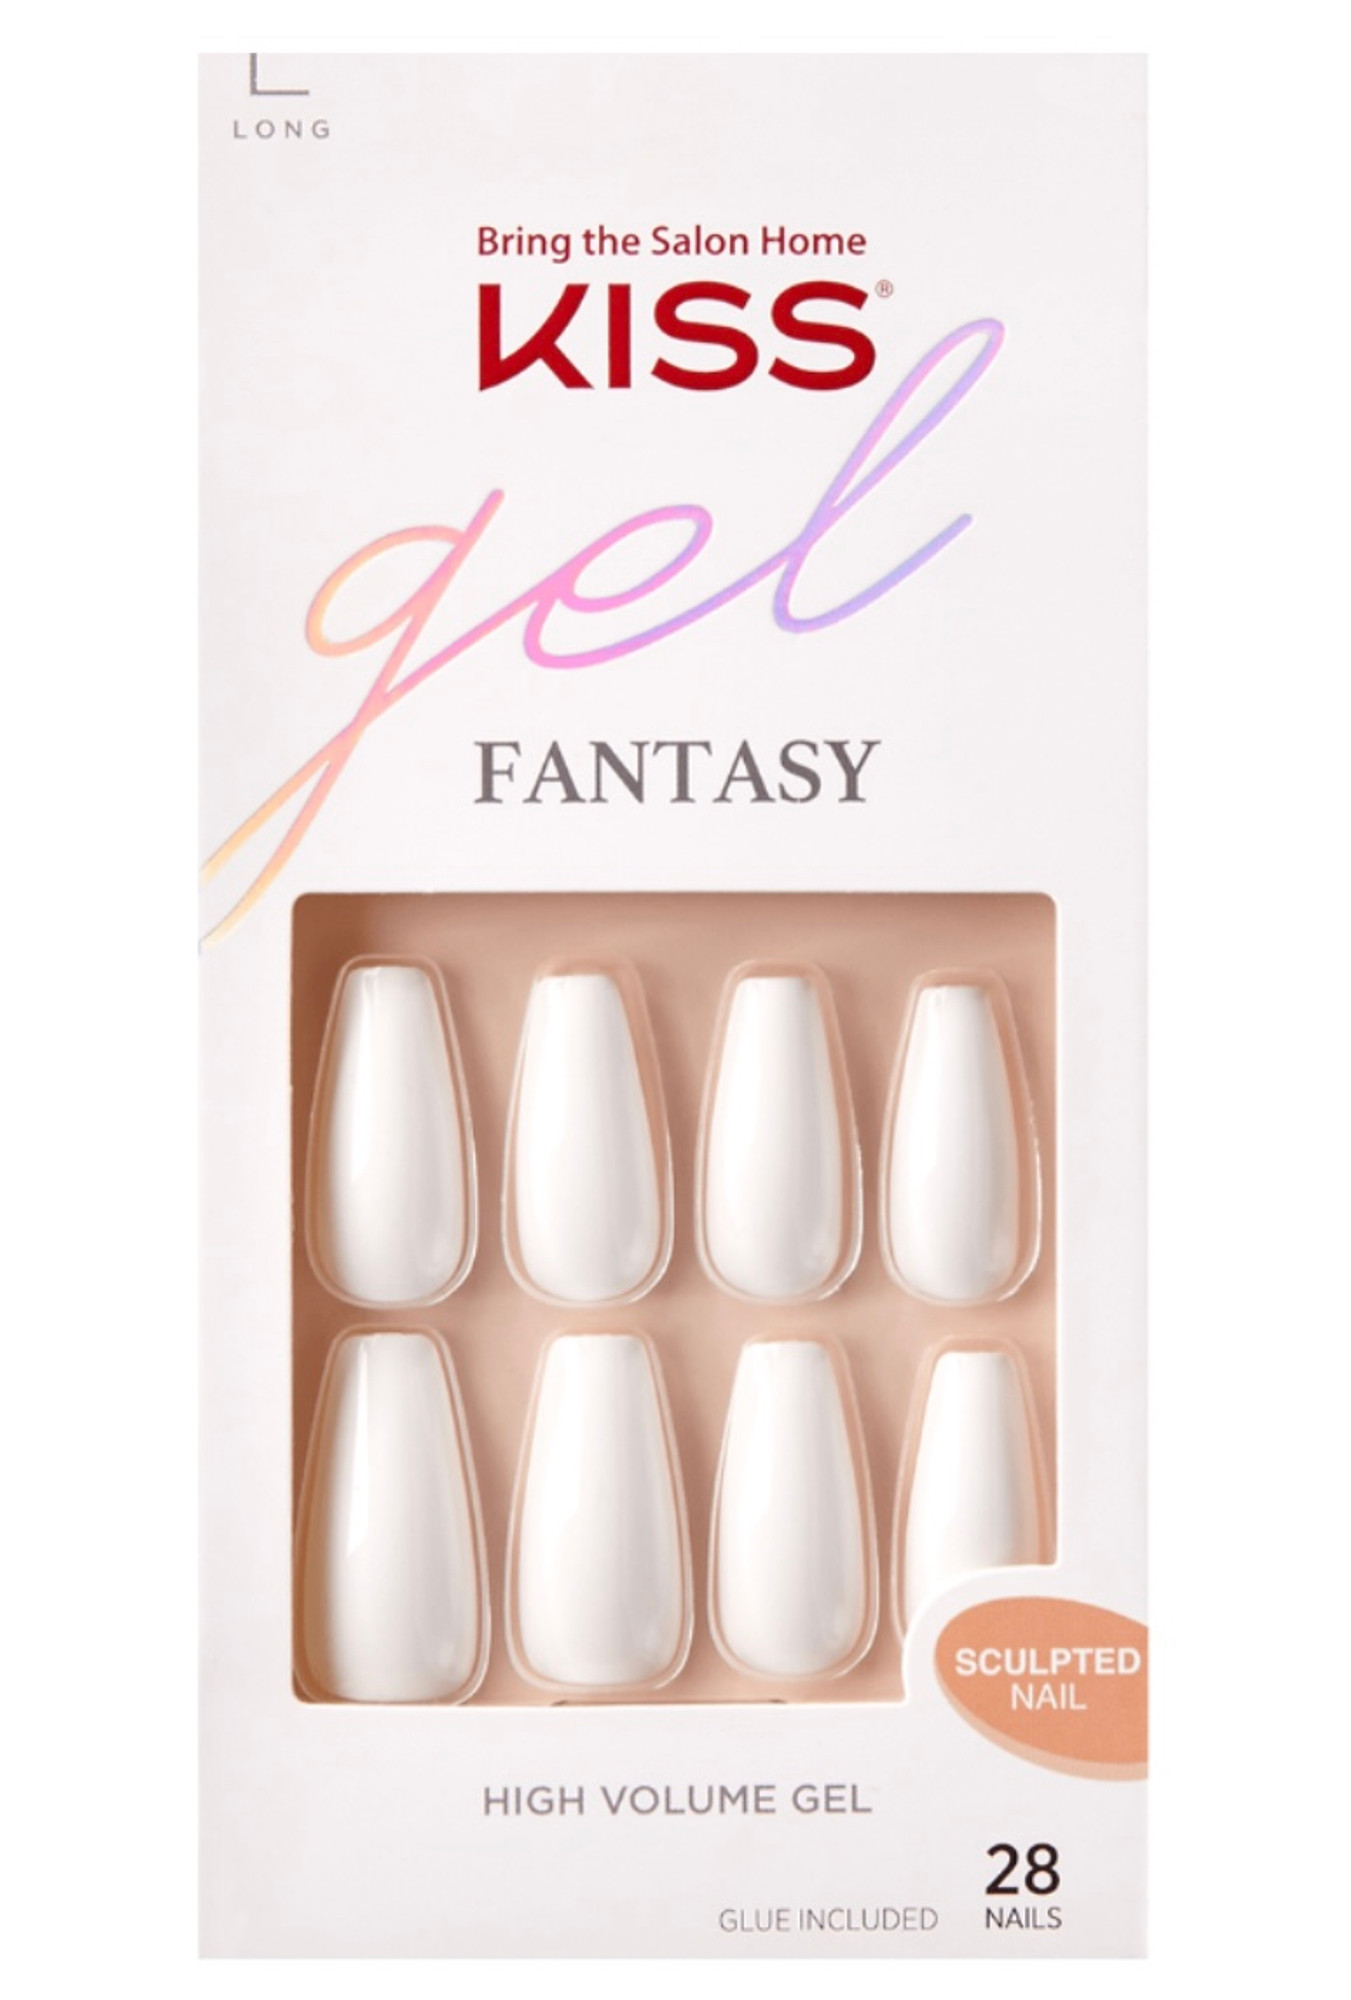 KISS Gel Fantasy Sculpted Nails